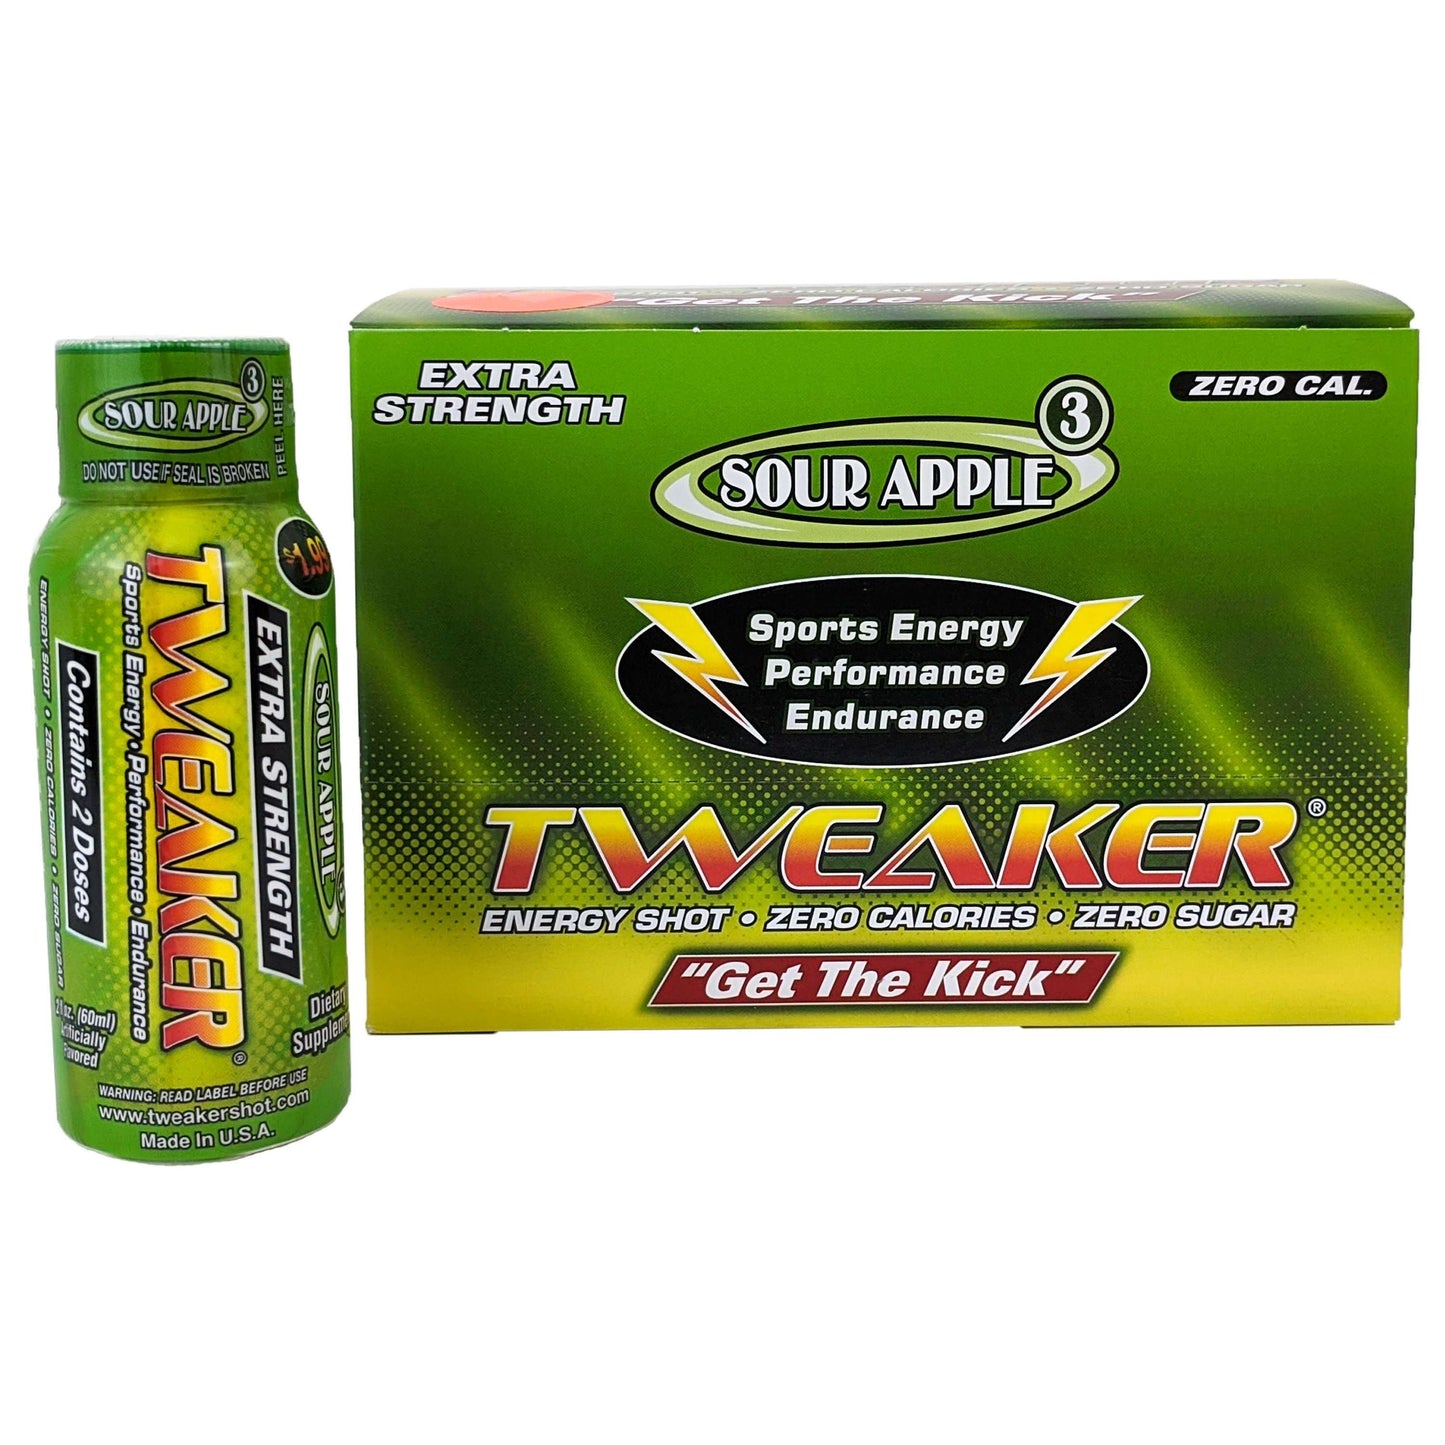 Tweaker 2oz Extra Strength Energy Shots, Box of 12, Sour Apple Flavor